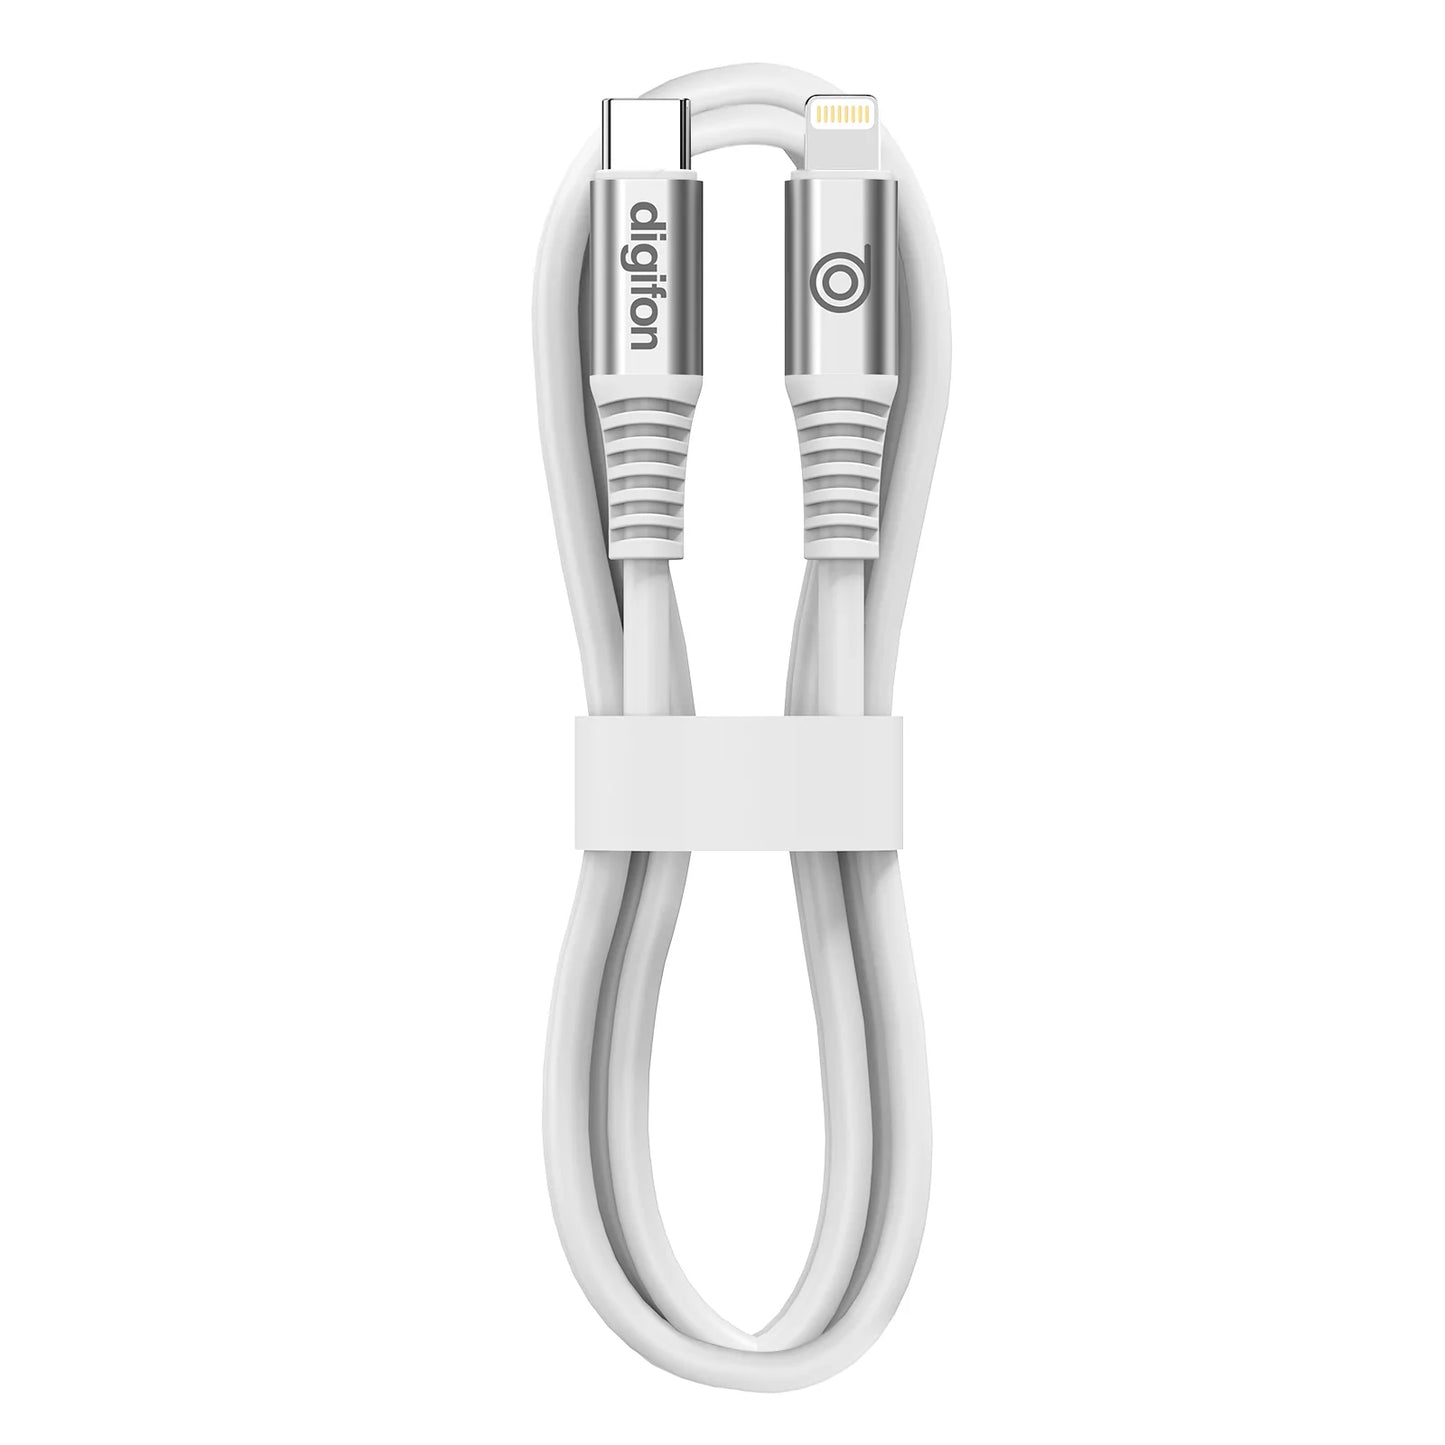 digifon Cheetah Type C to Lightning USB Cable 2M White